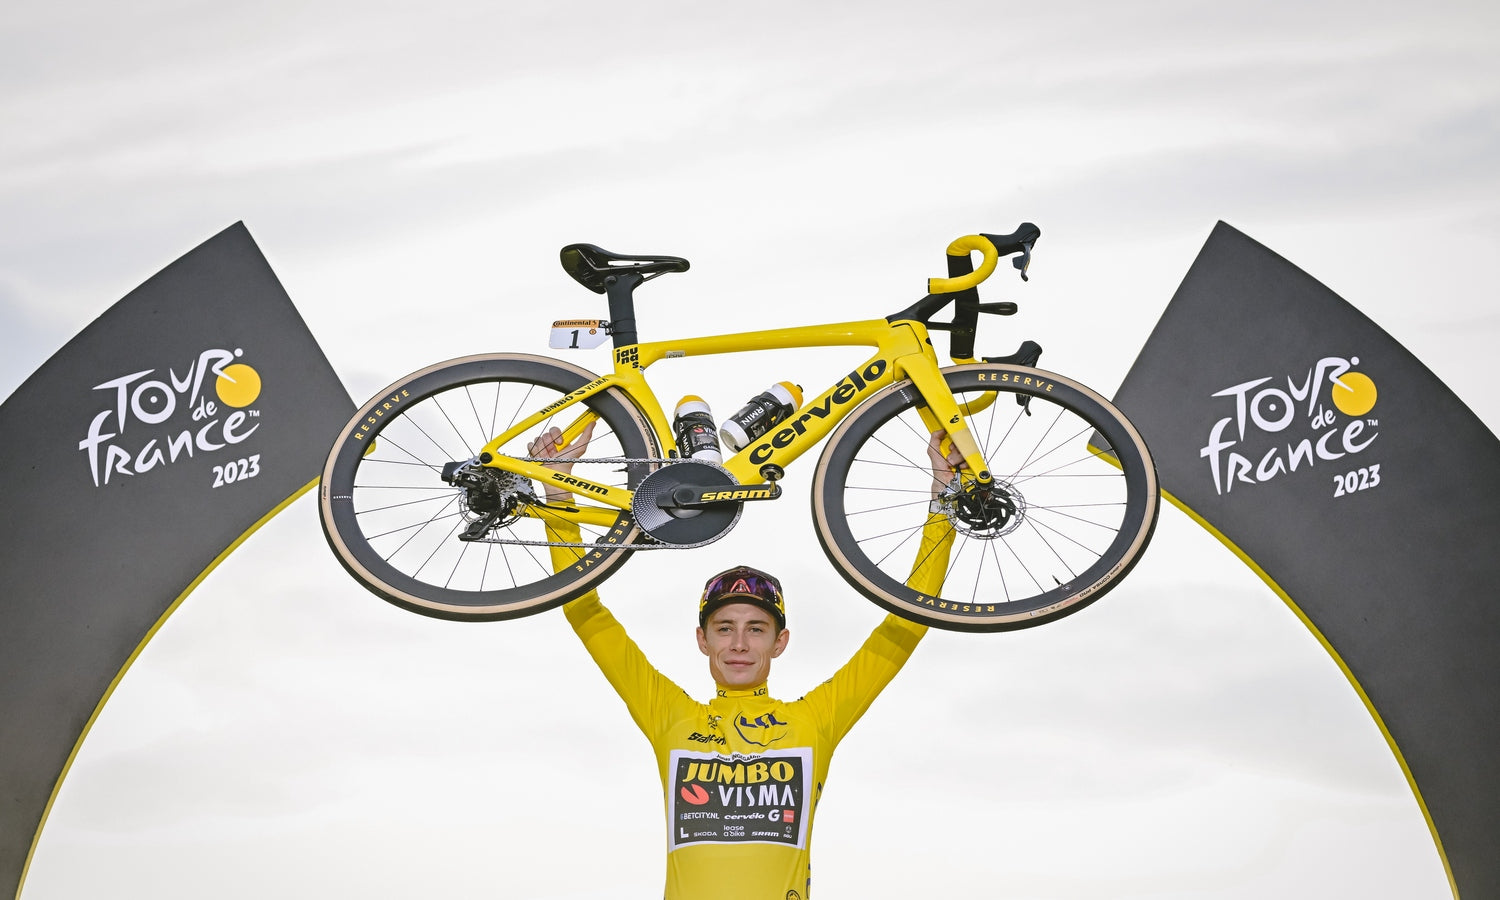 Stage winning 2023 Tour de France bikes